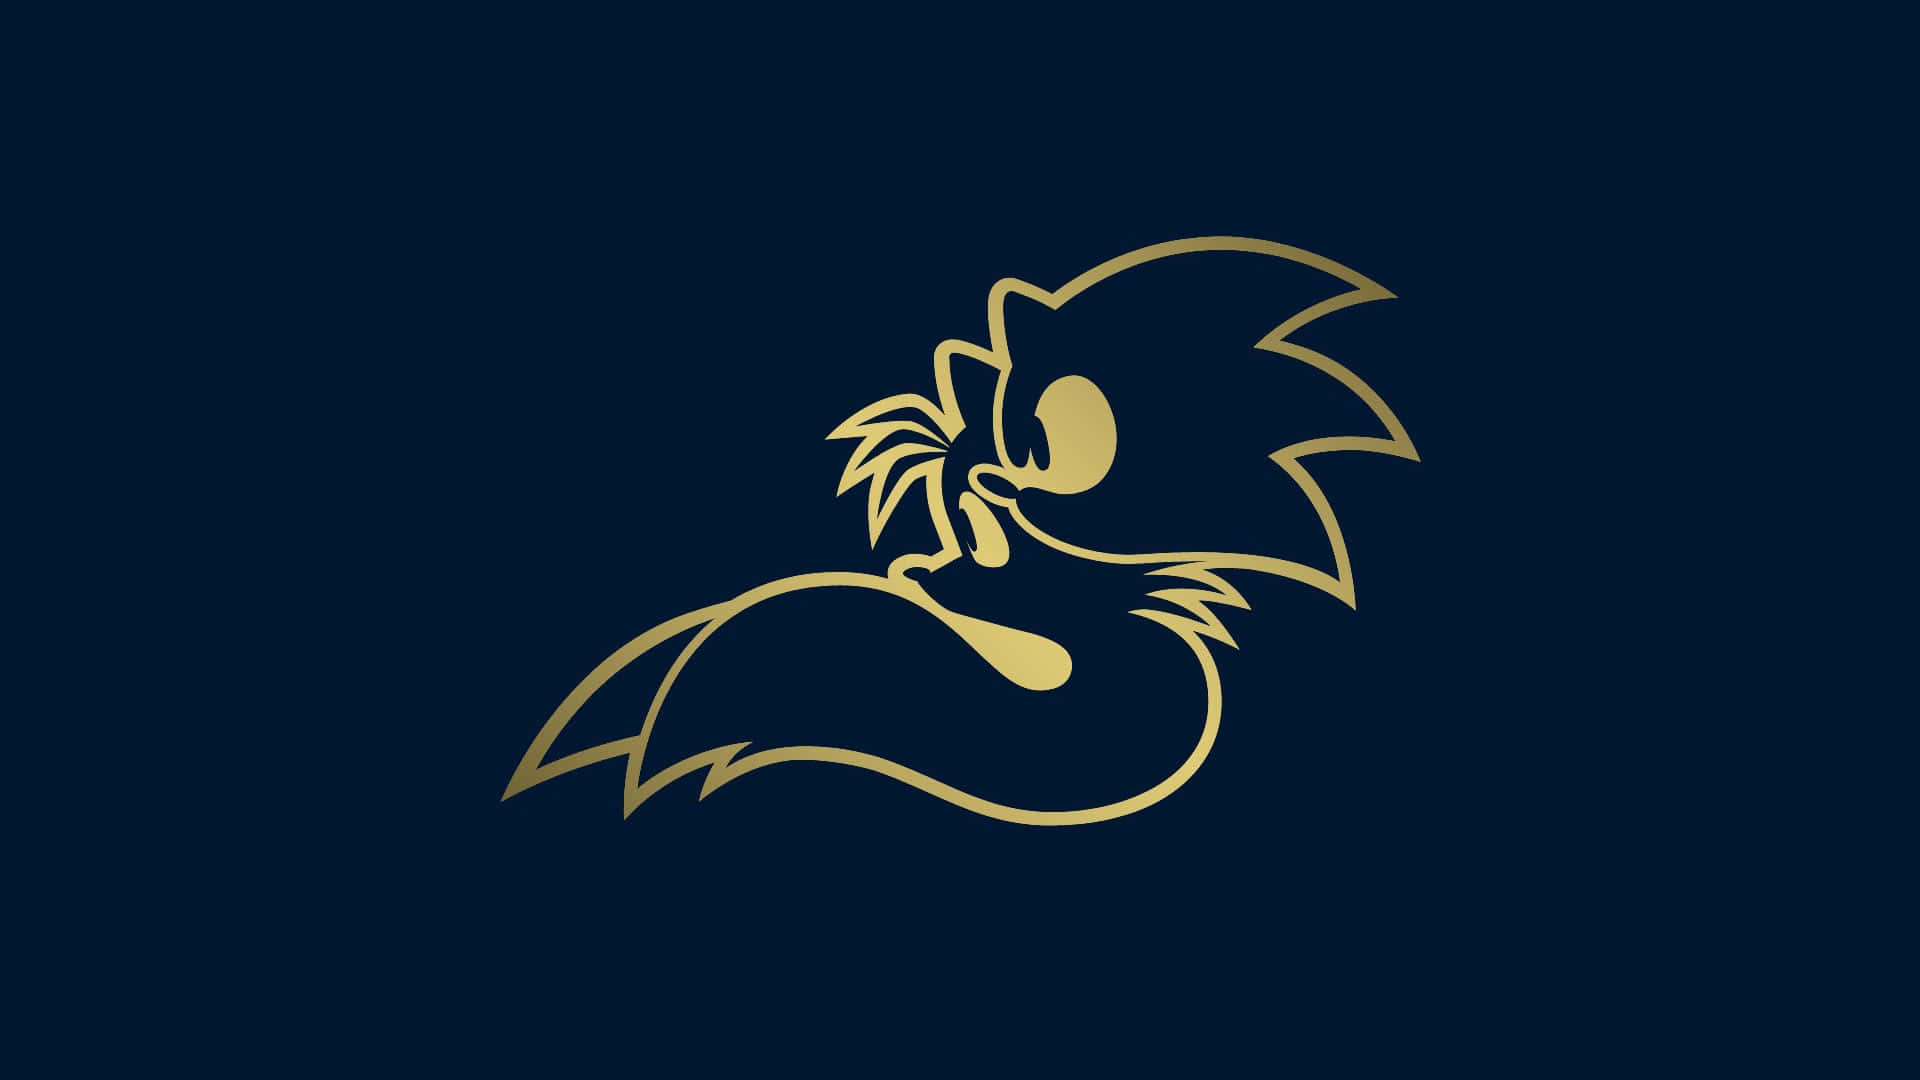 Sonic The Hedgehog Logo On A Dark Background Background